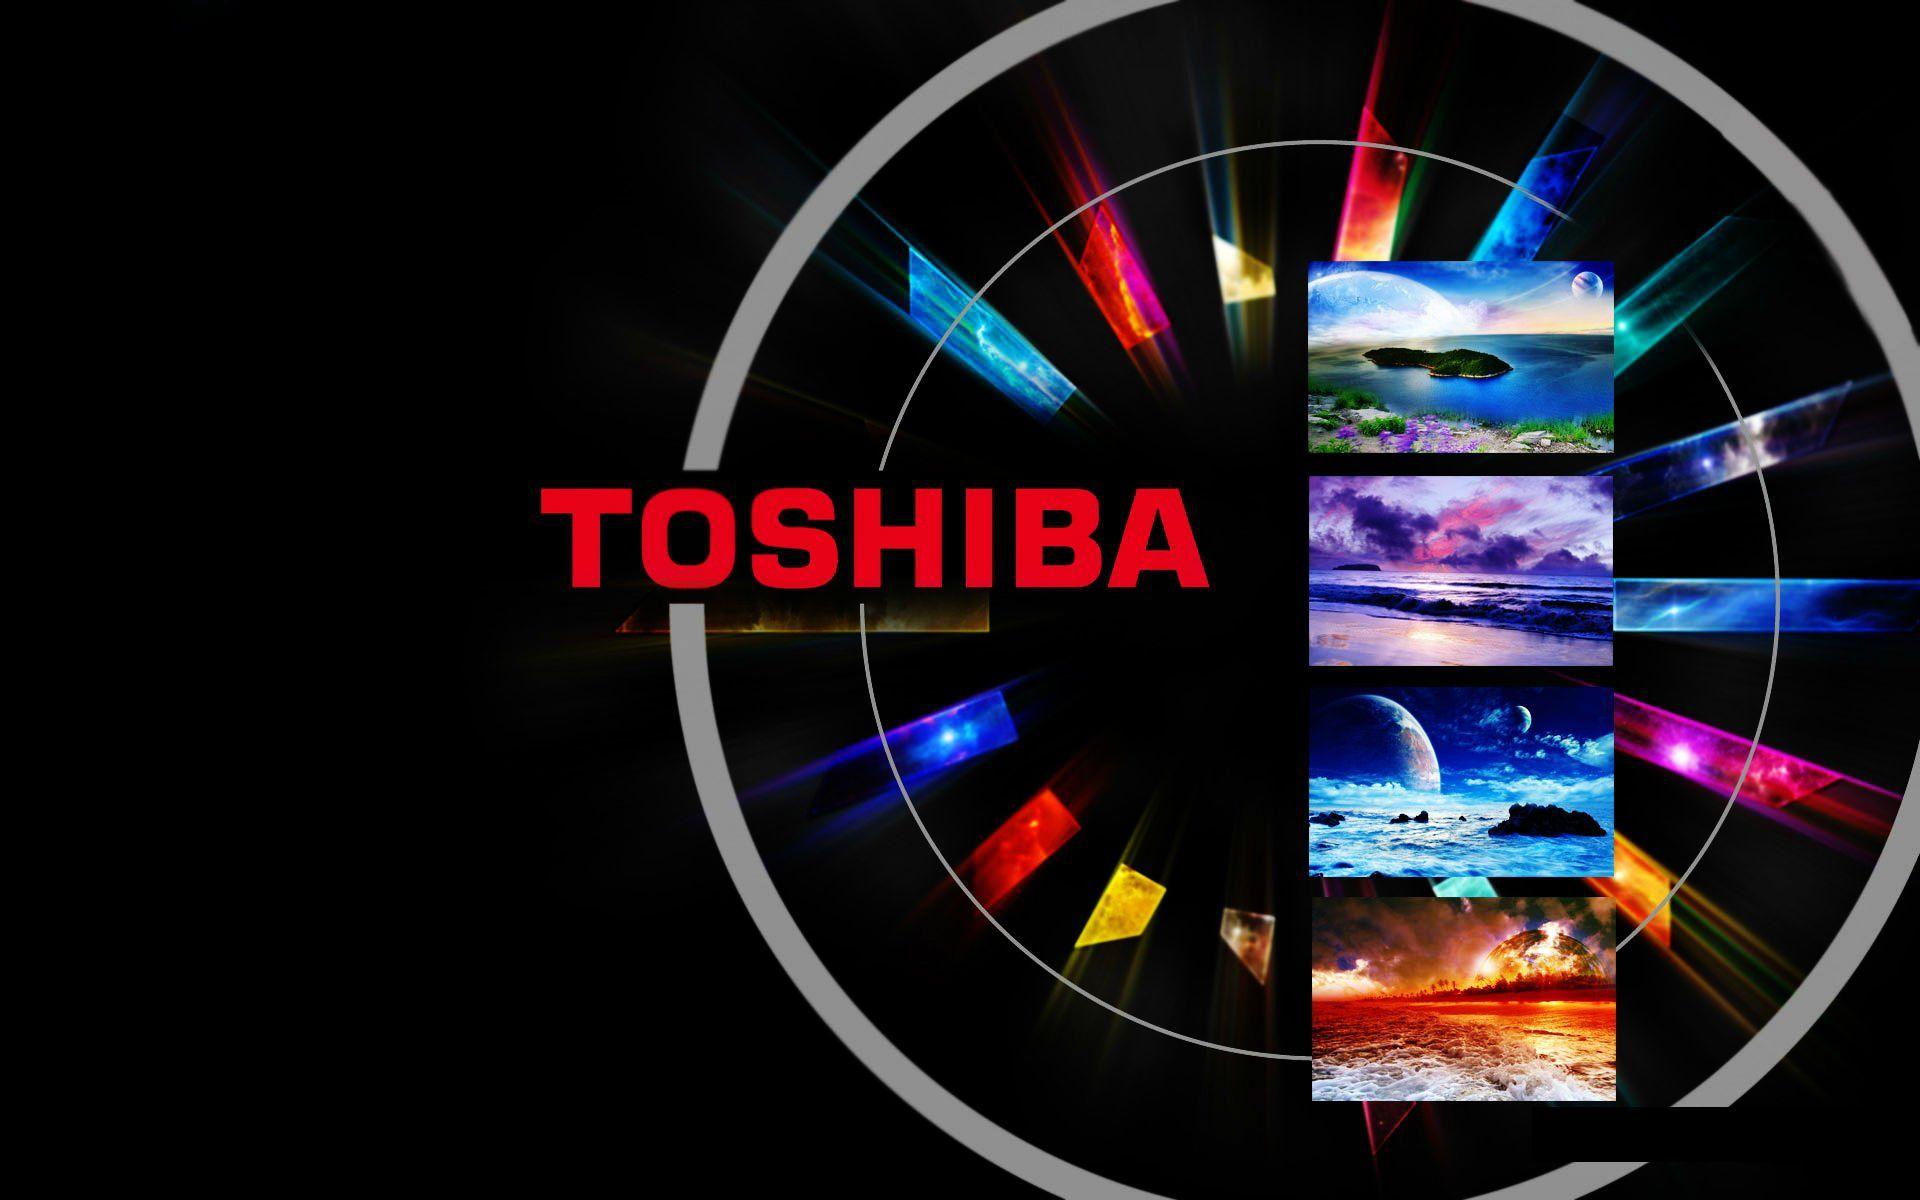 Toshiba Satellite Wallpaper Toshiba Computers Wallpaper in jpg